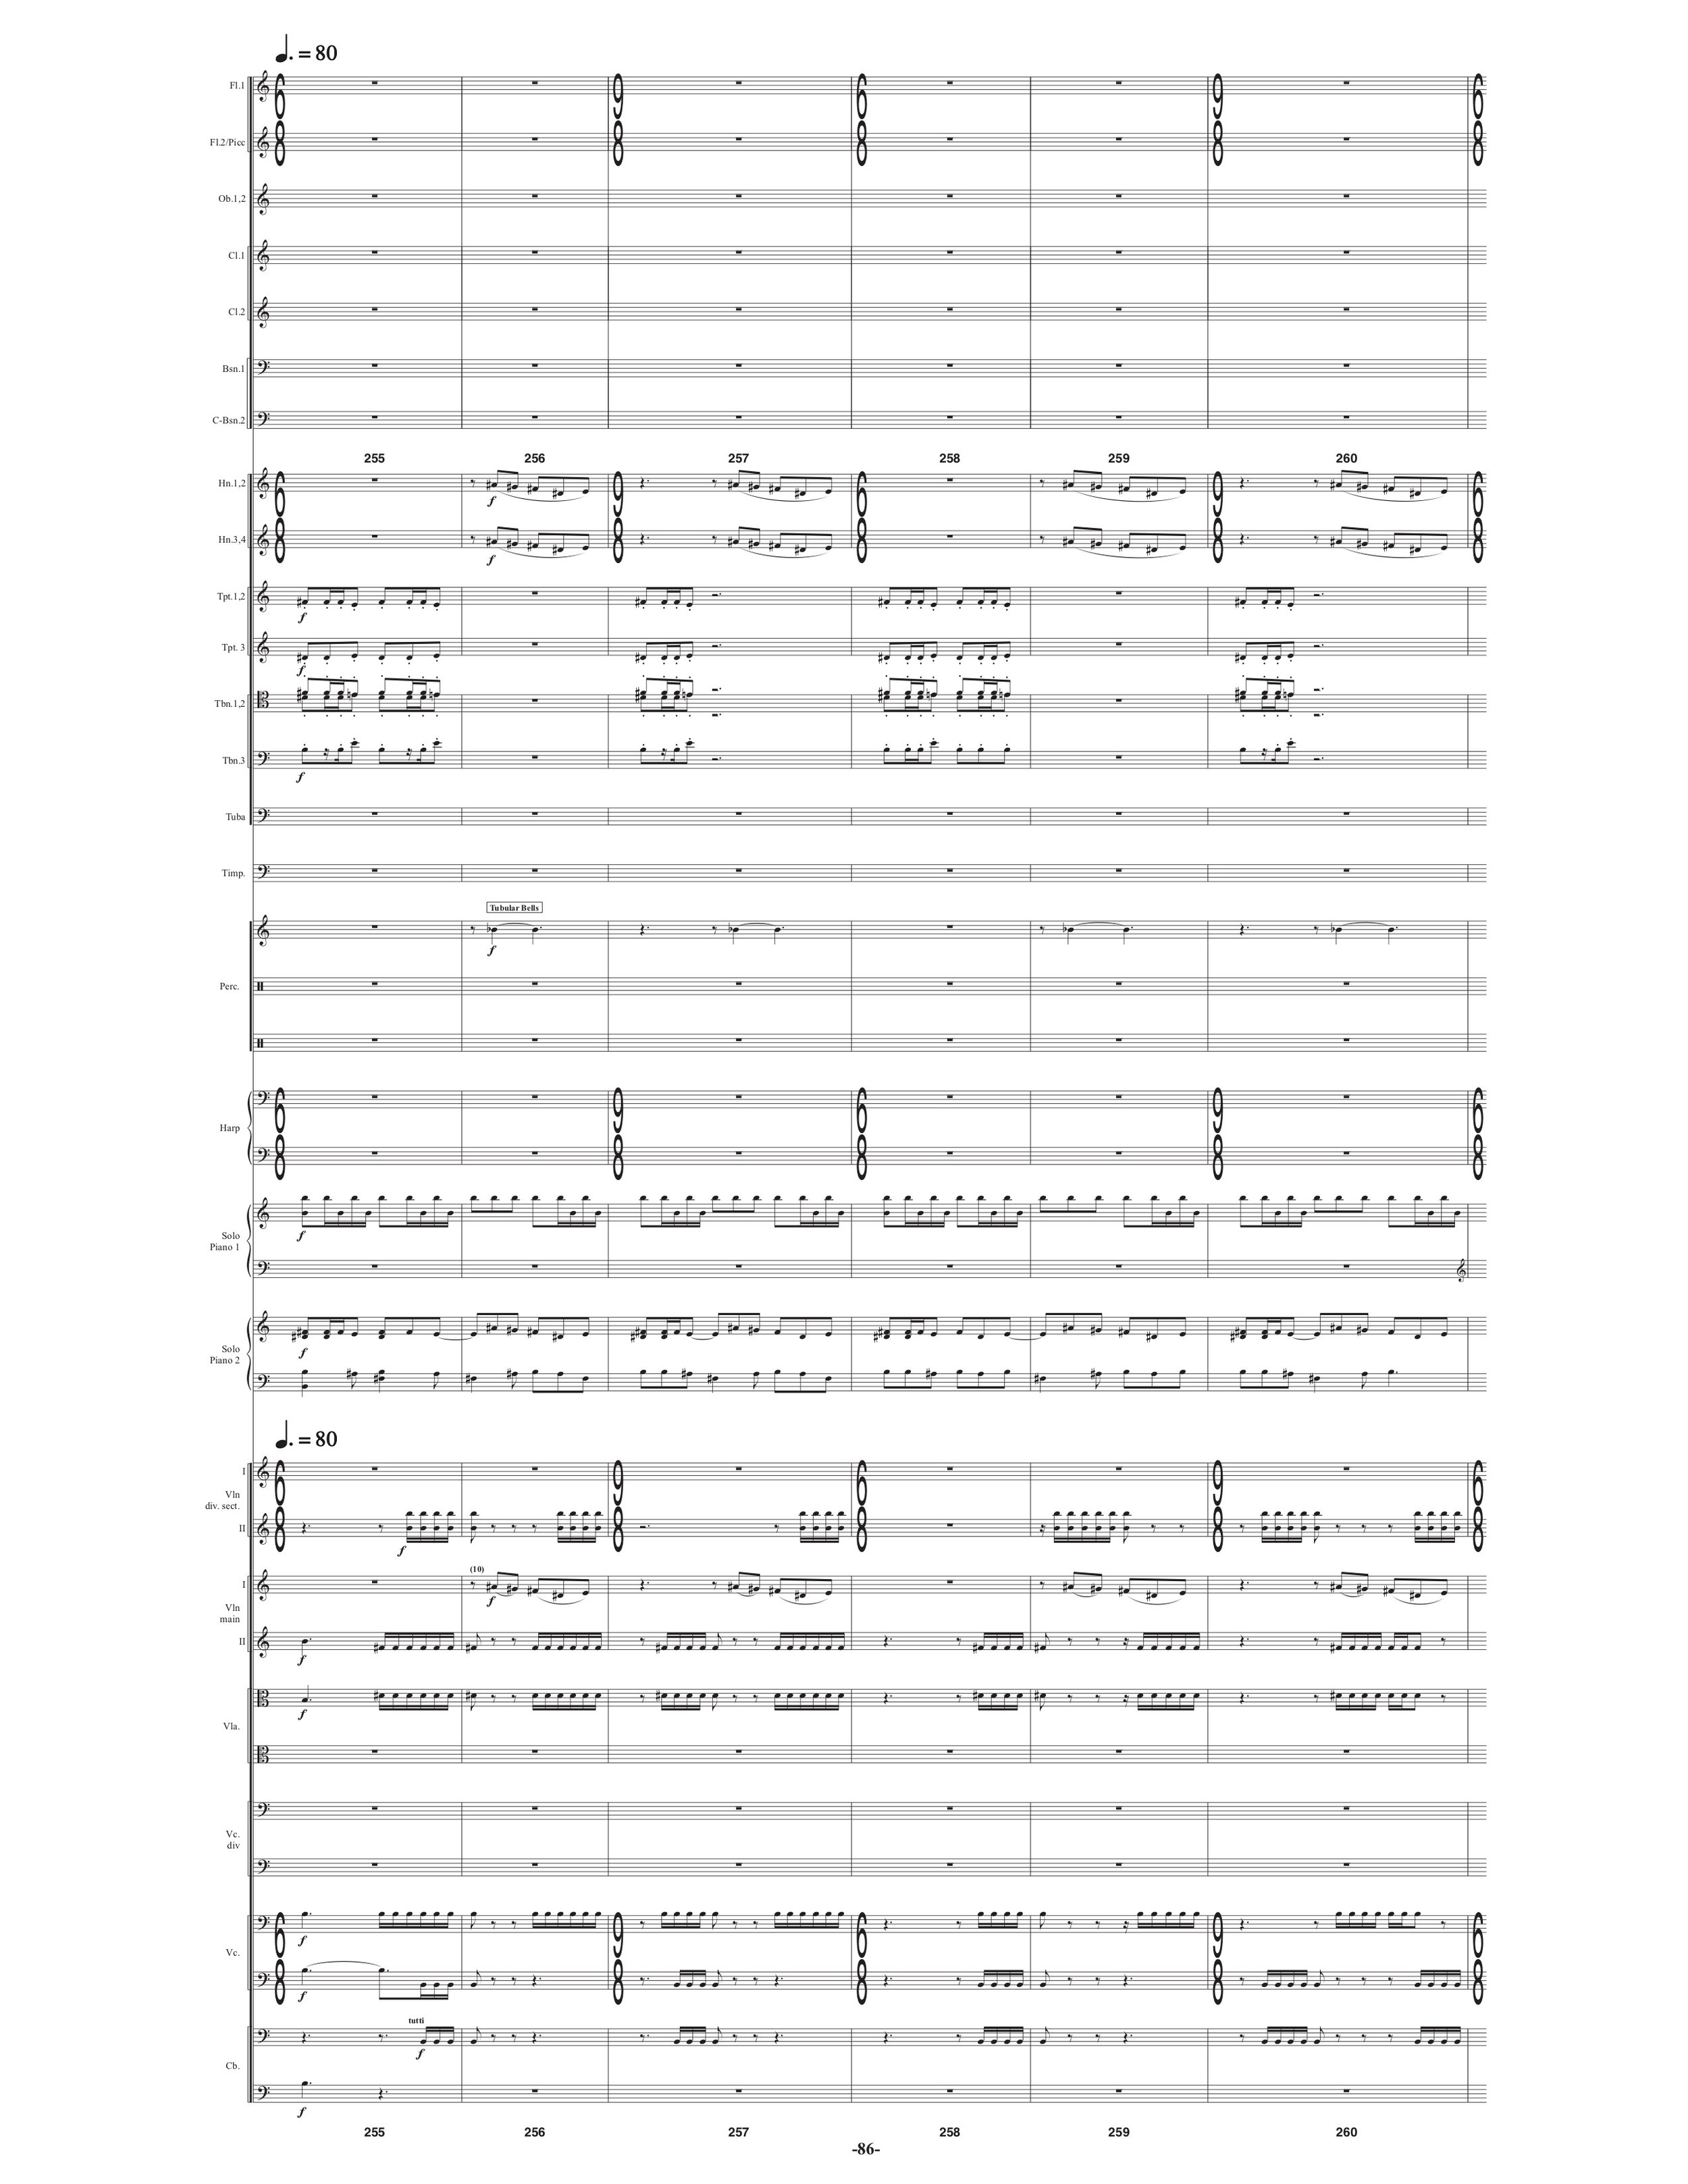 Symphony_Orch & 2 Pianos p91.jpg